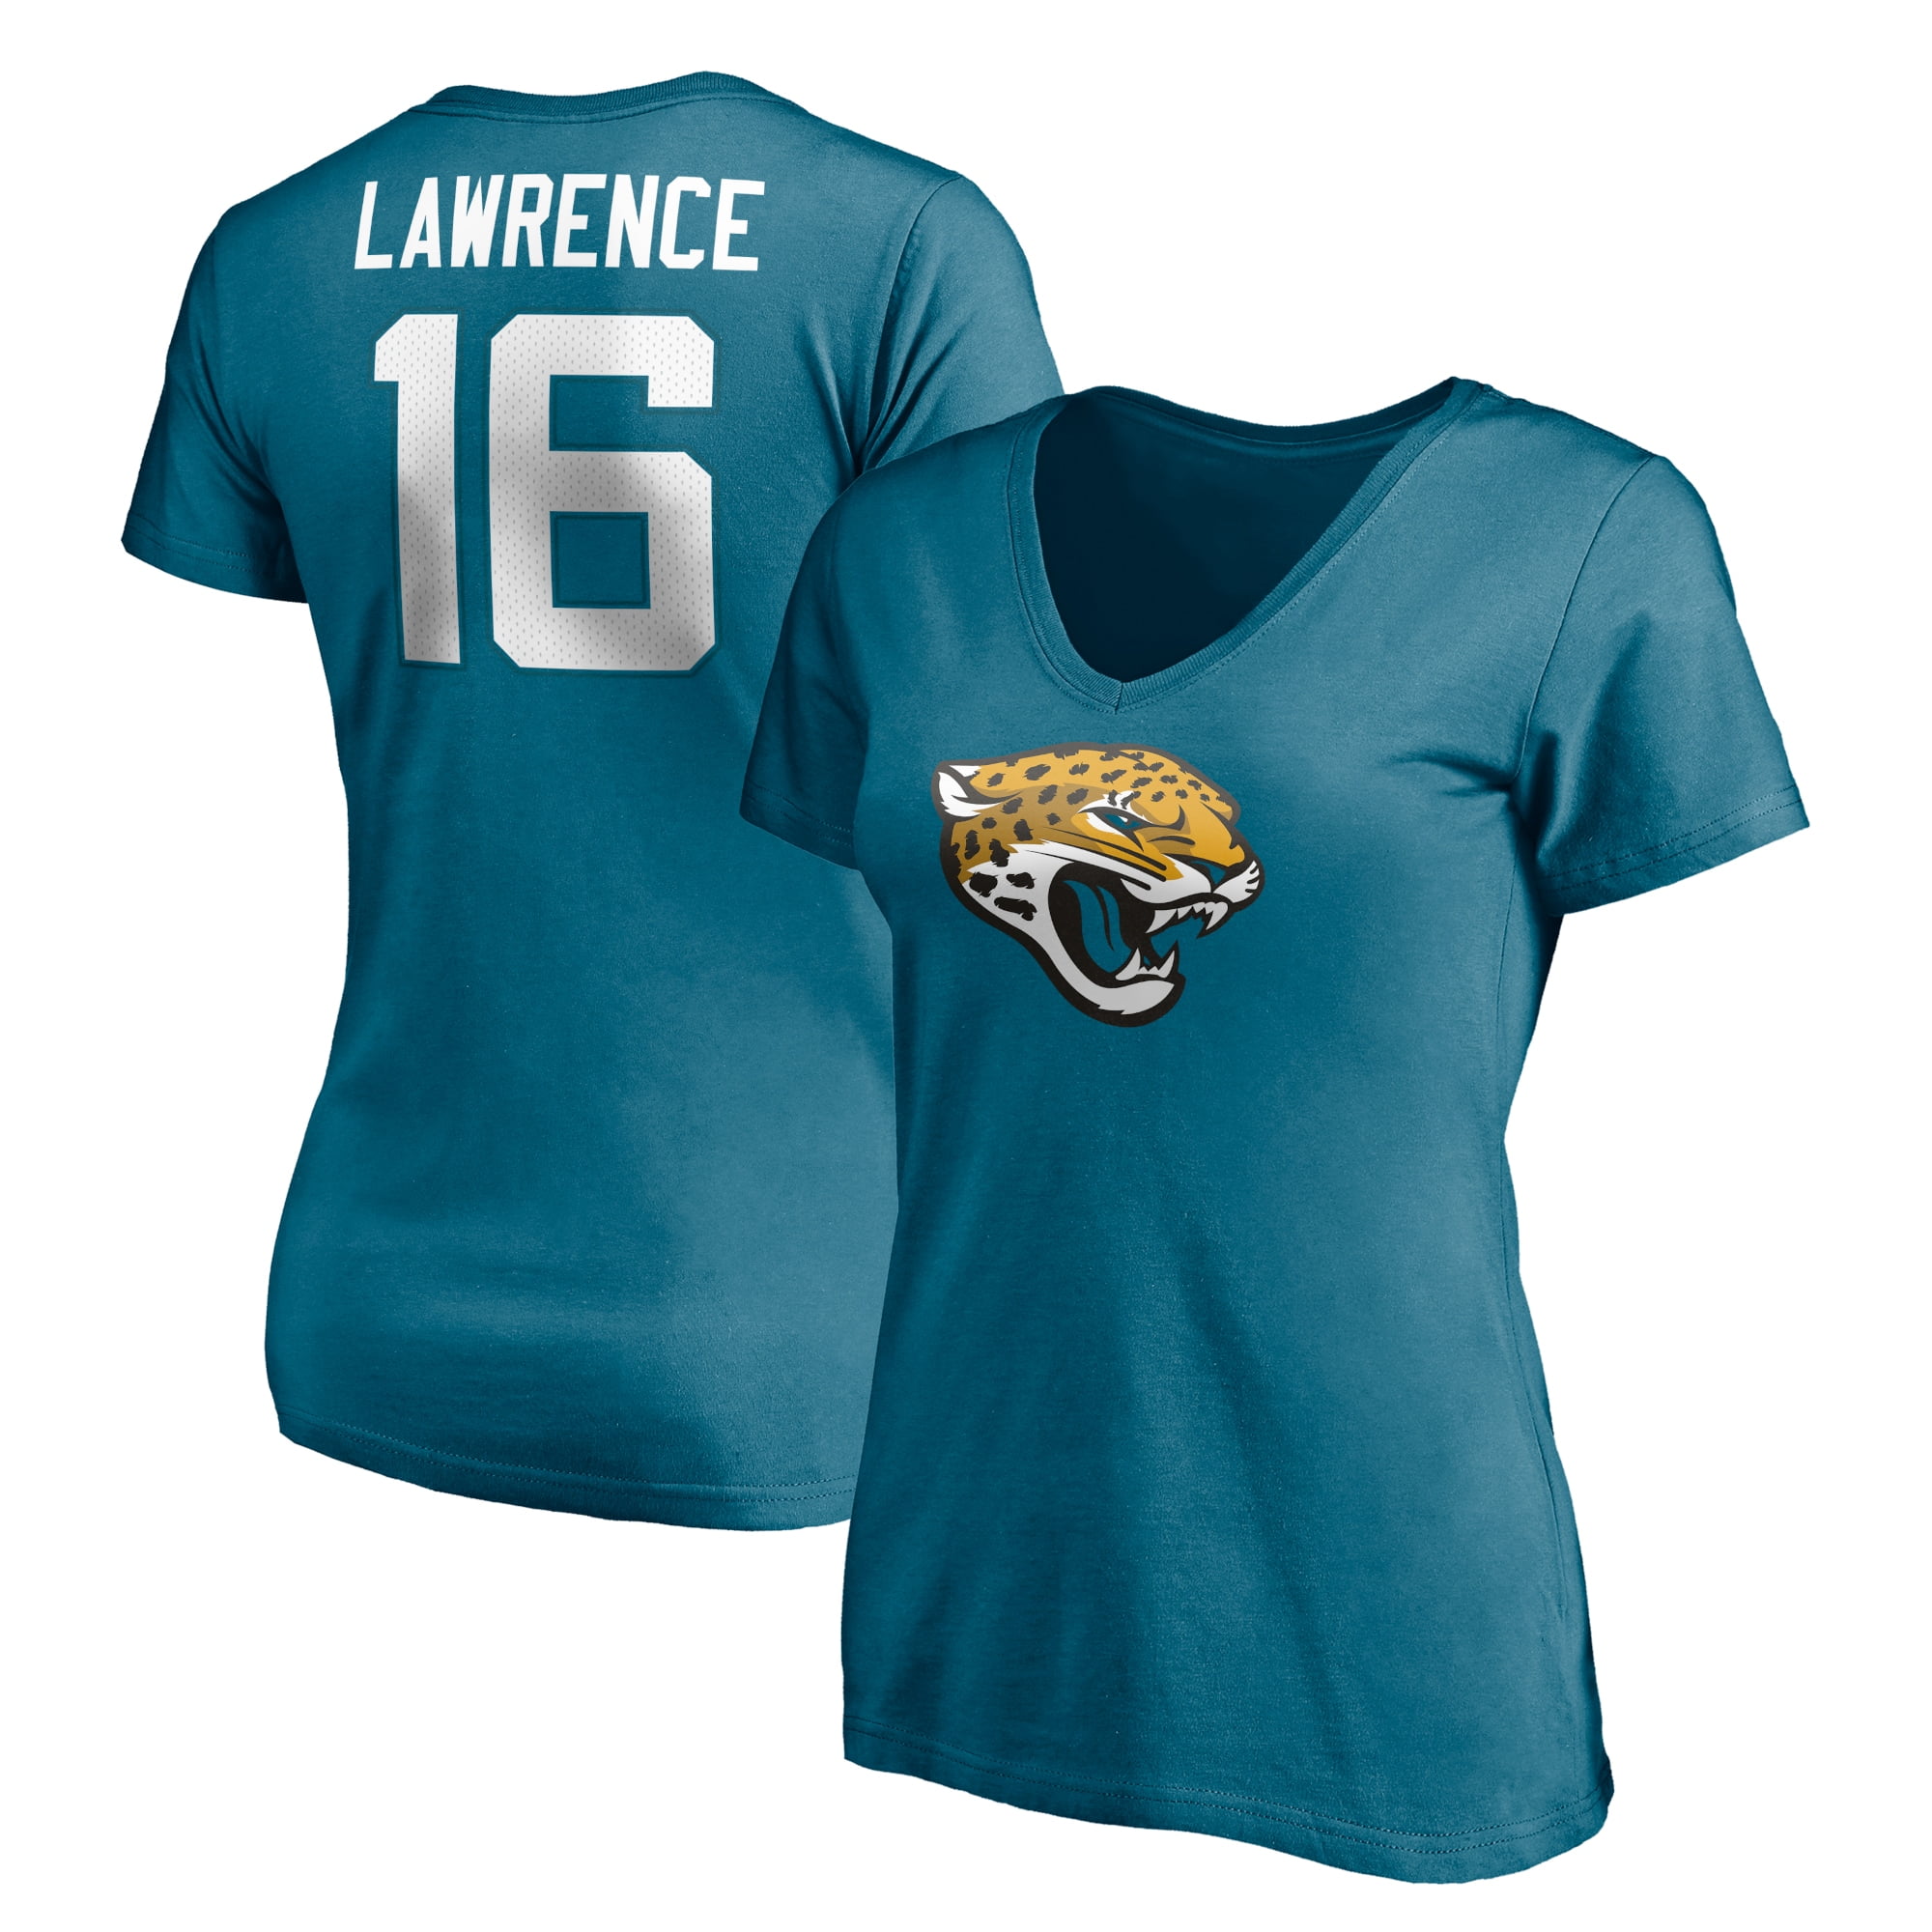 jaguars women's shirts